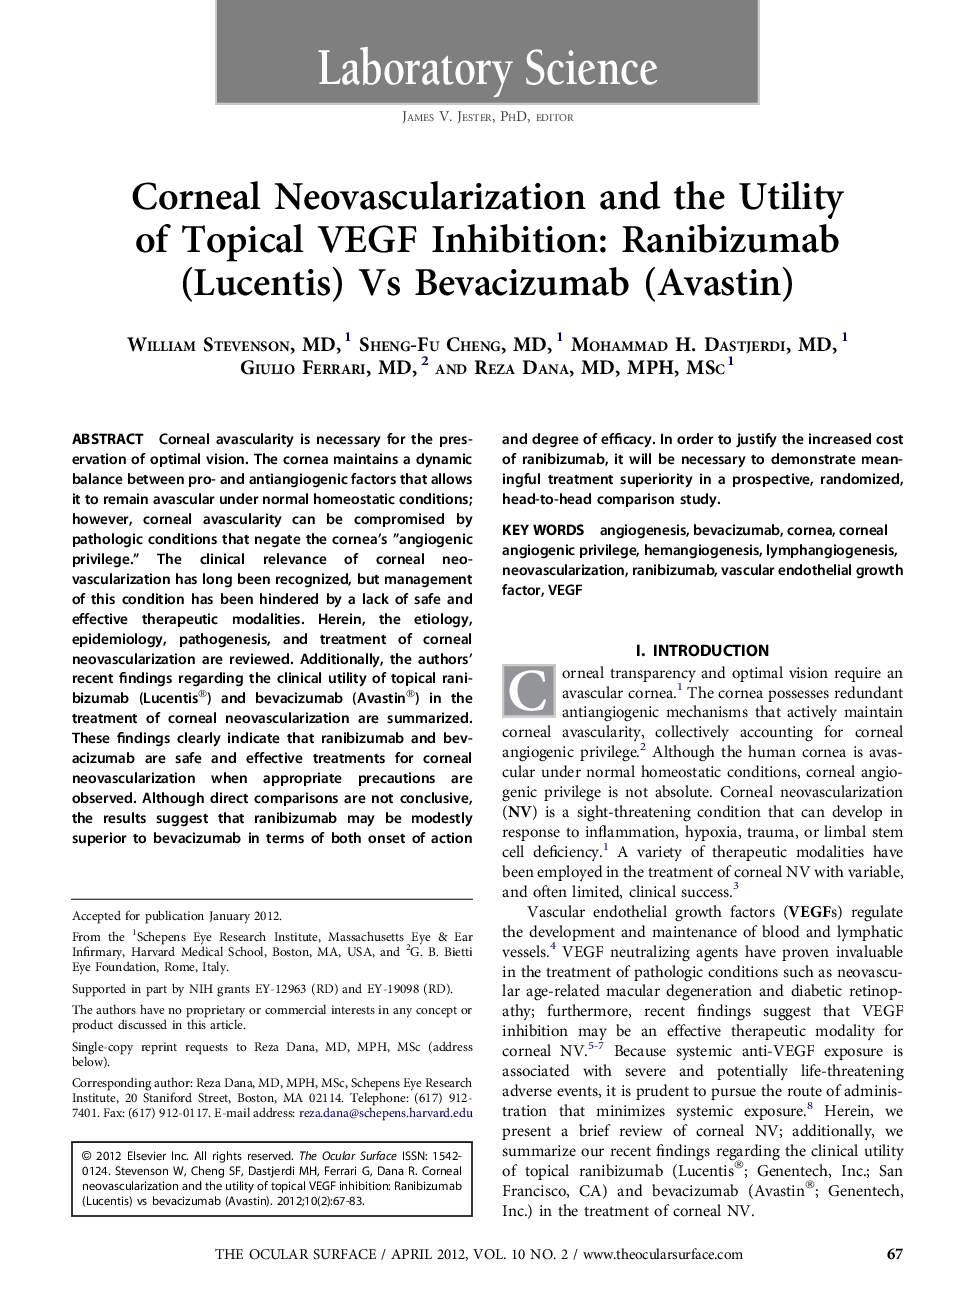 Corneal Neovascularization and the Utility of Topical VEGF Inhibition: Ranibizumab (Lucentis) Vs Bevacizumab (Avastin) 